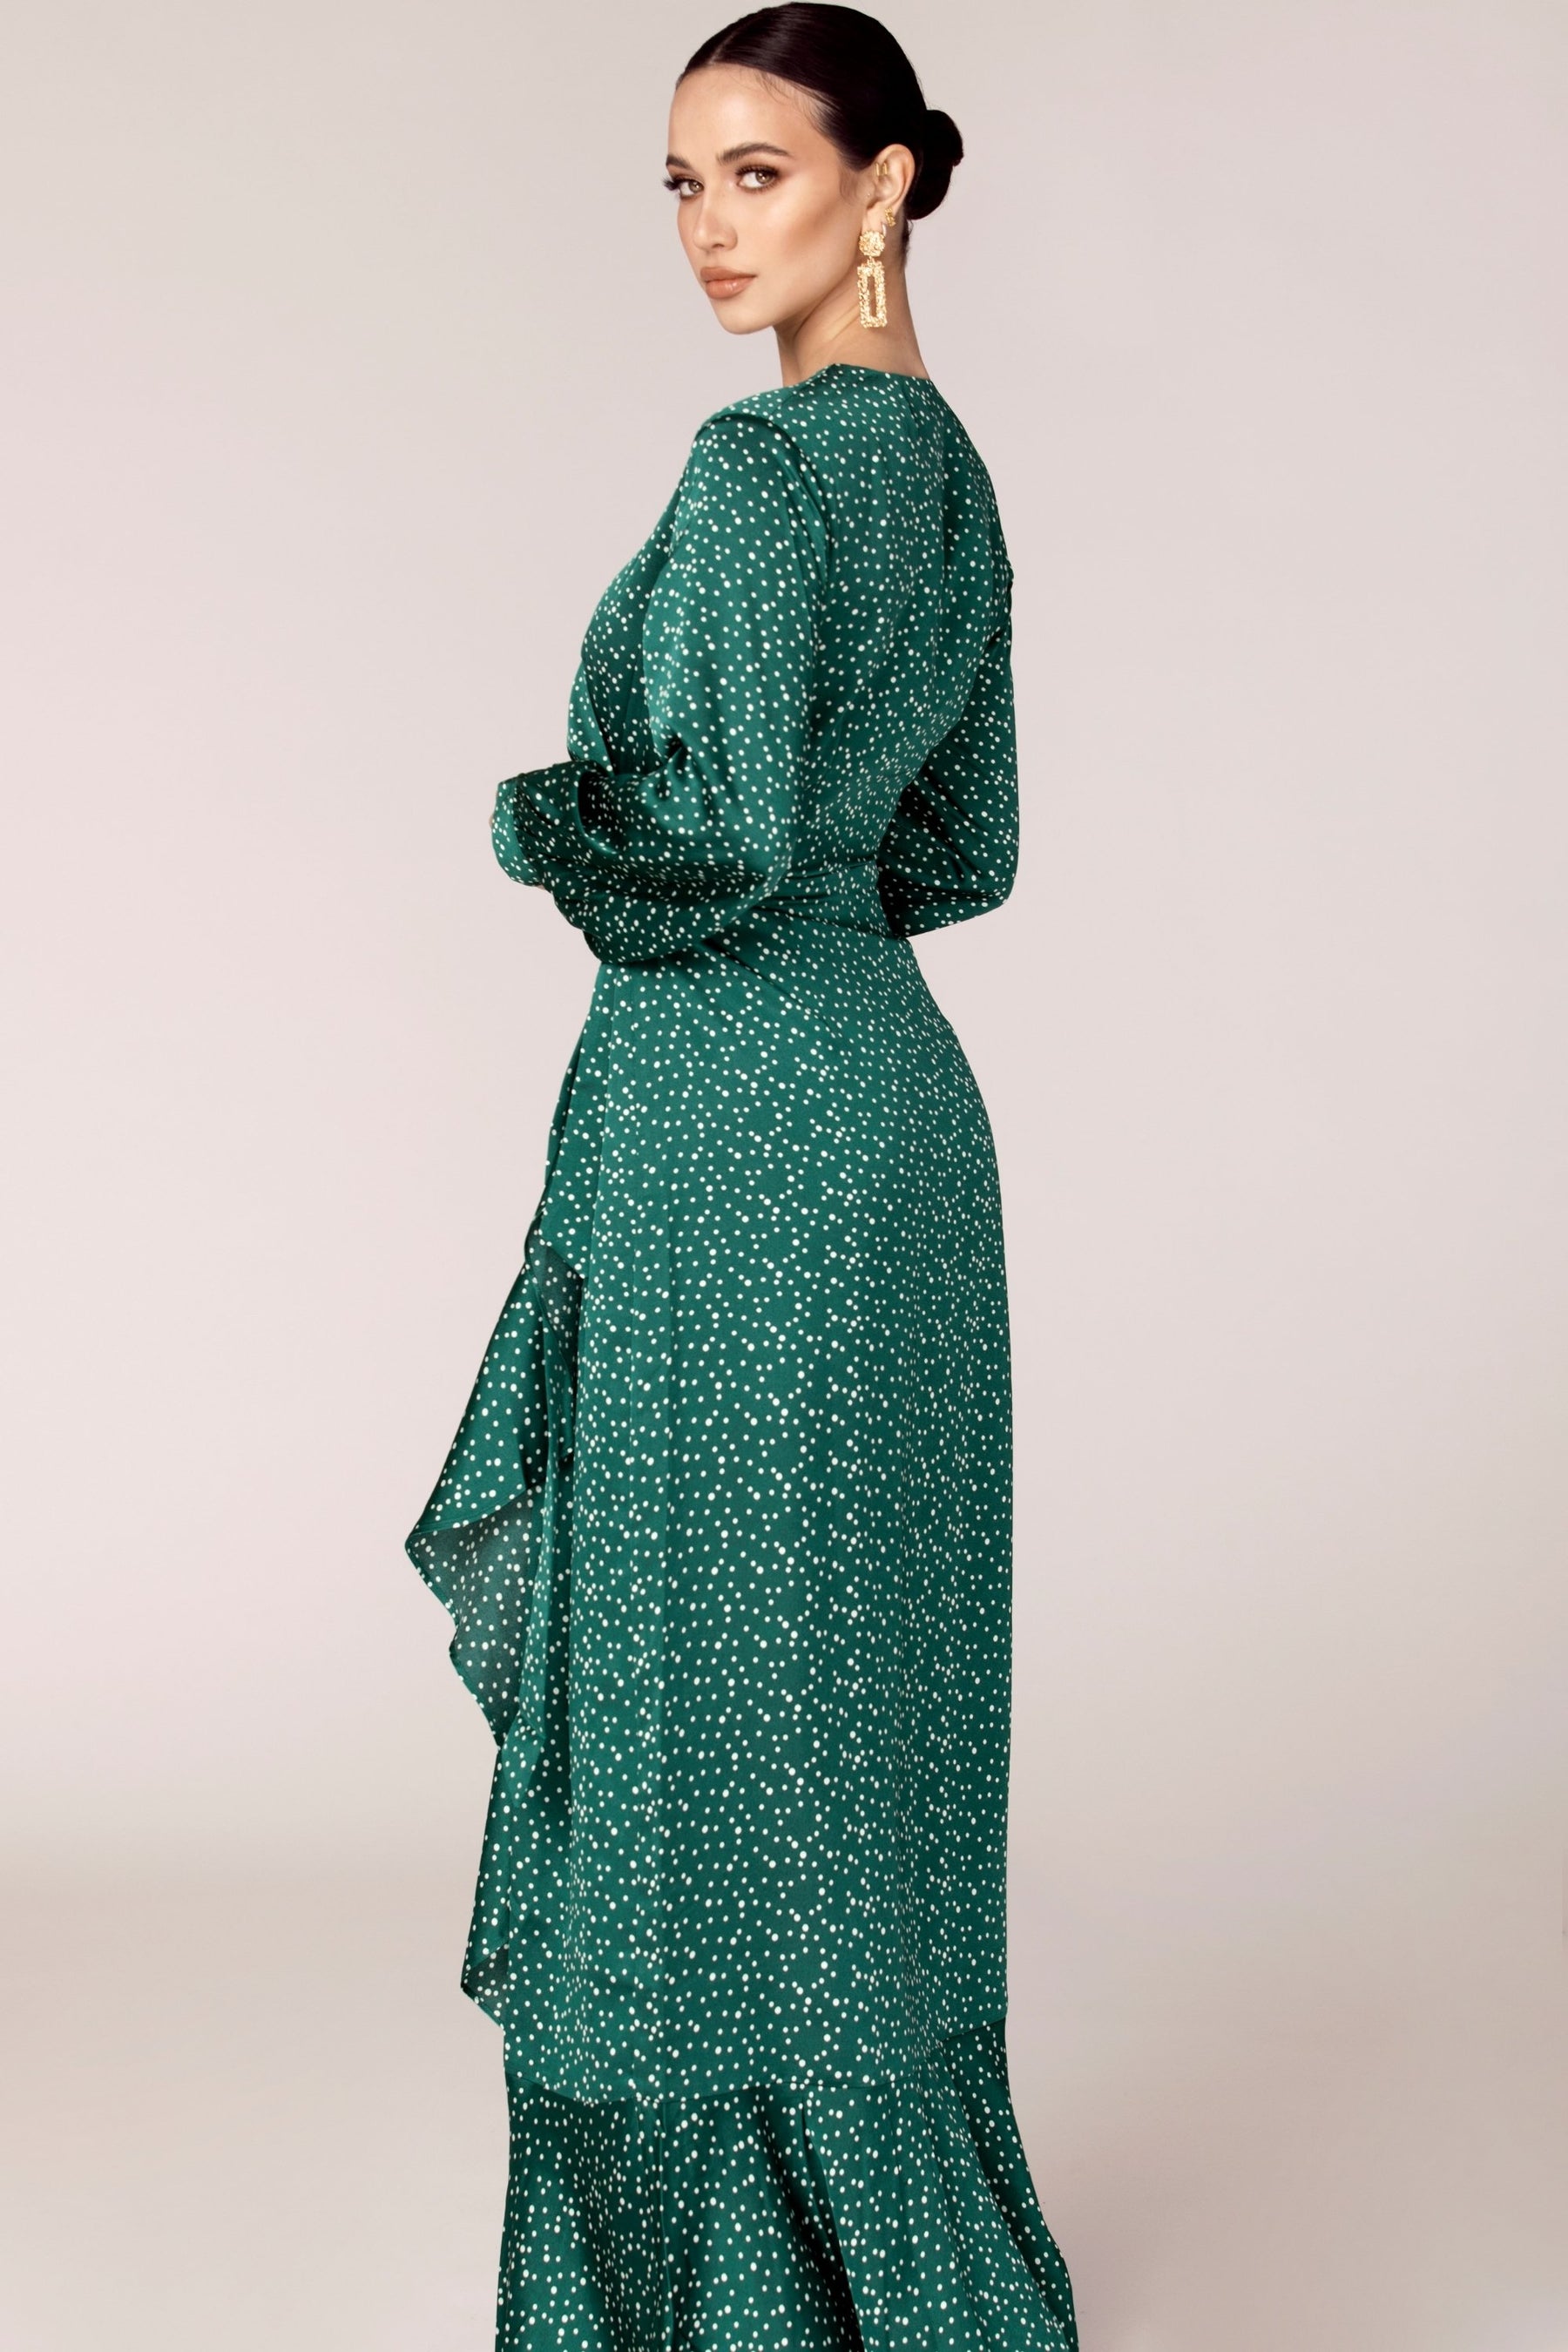 Emerald Polka Dot Satin Wrap Maxi Dress Dresses Veiled Collection 